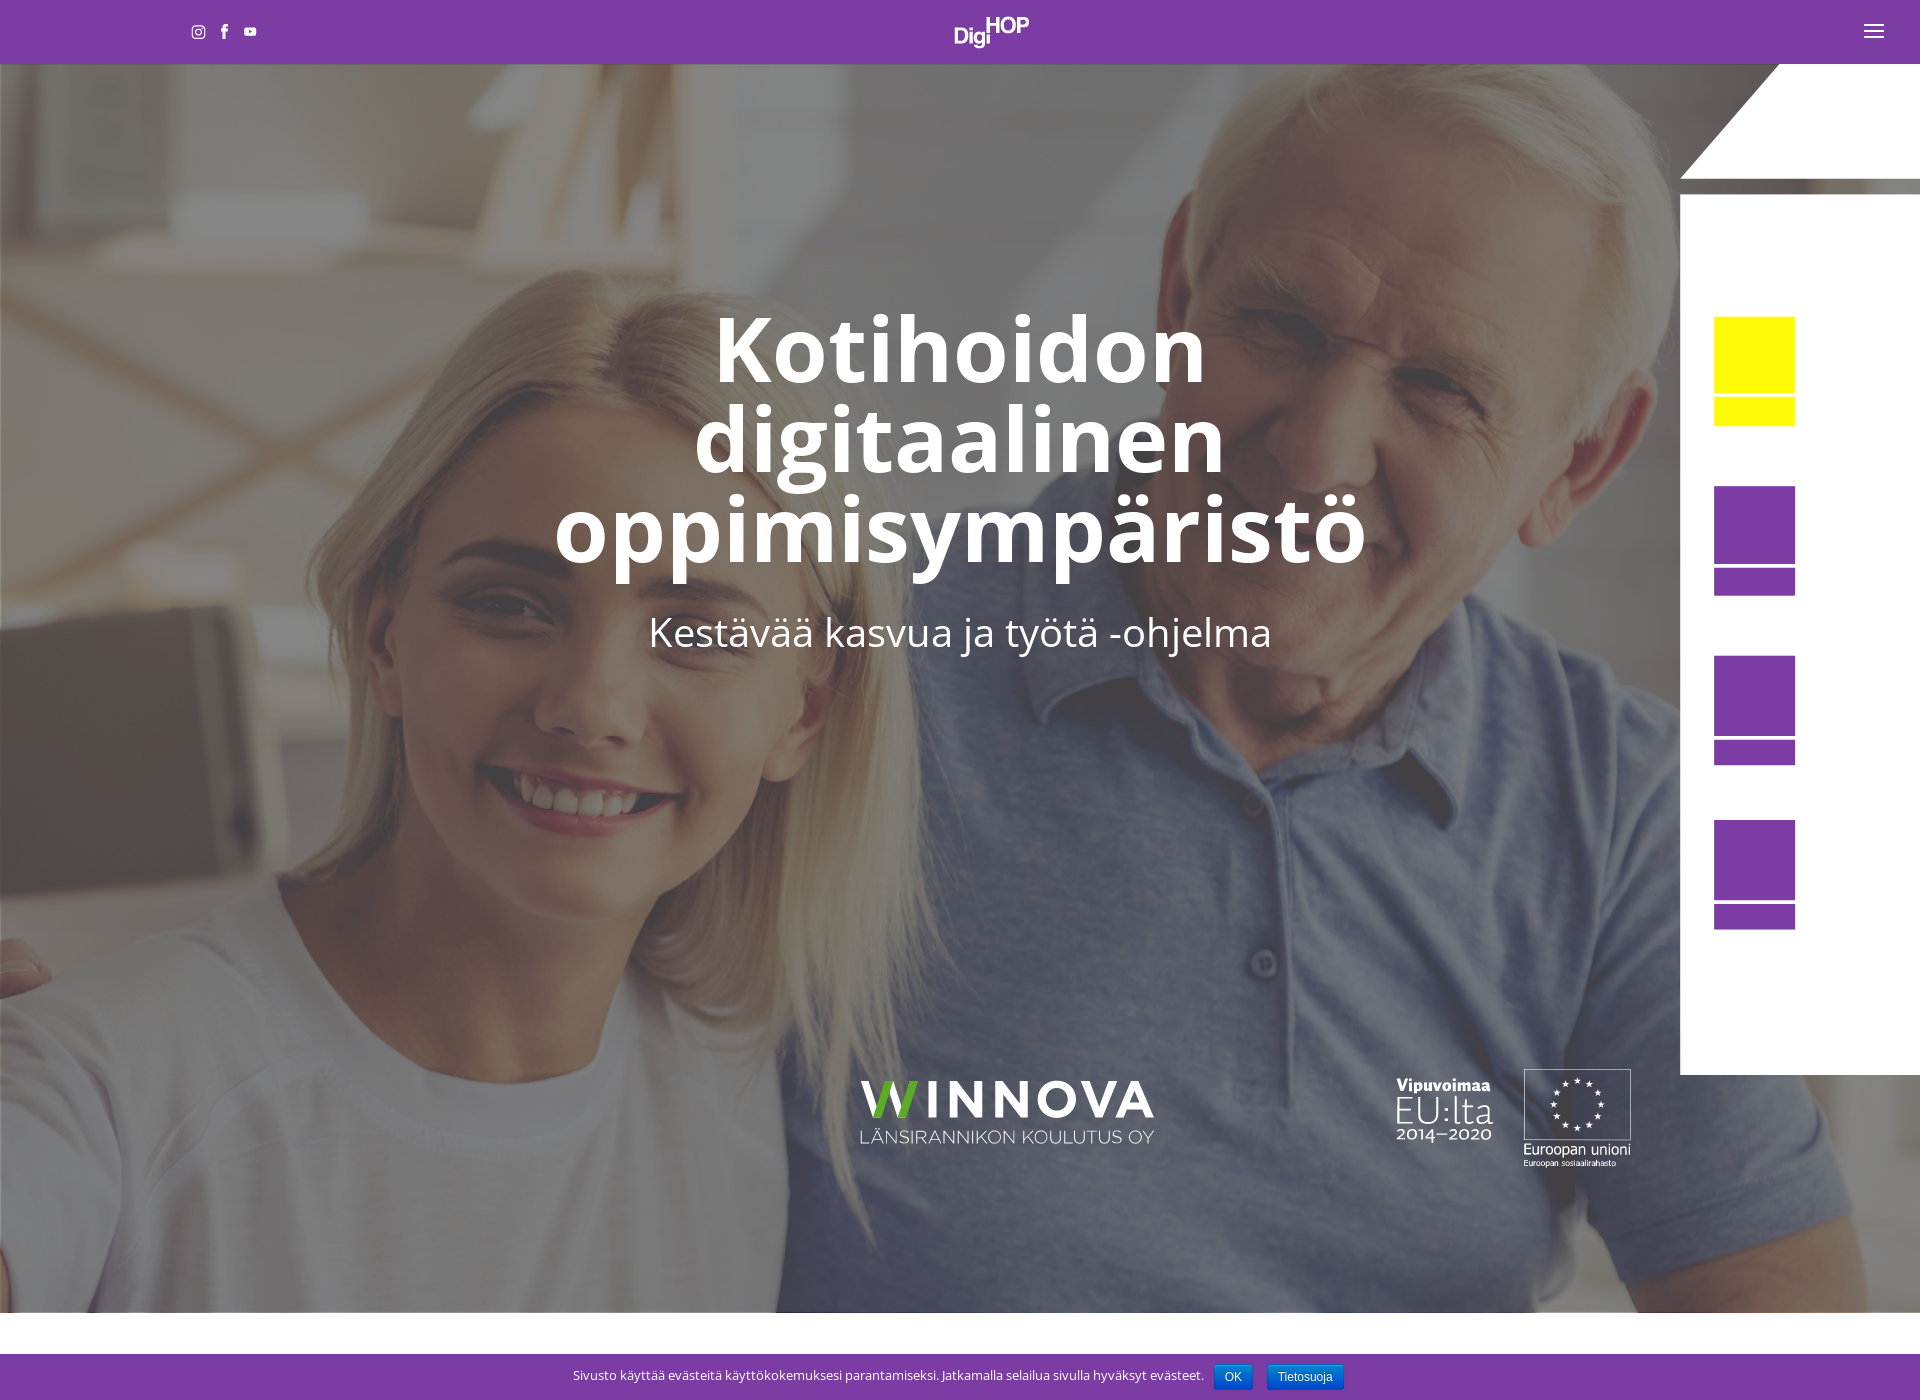 Screenshot for digihop.fi